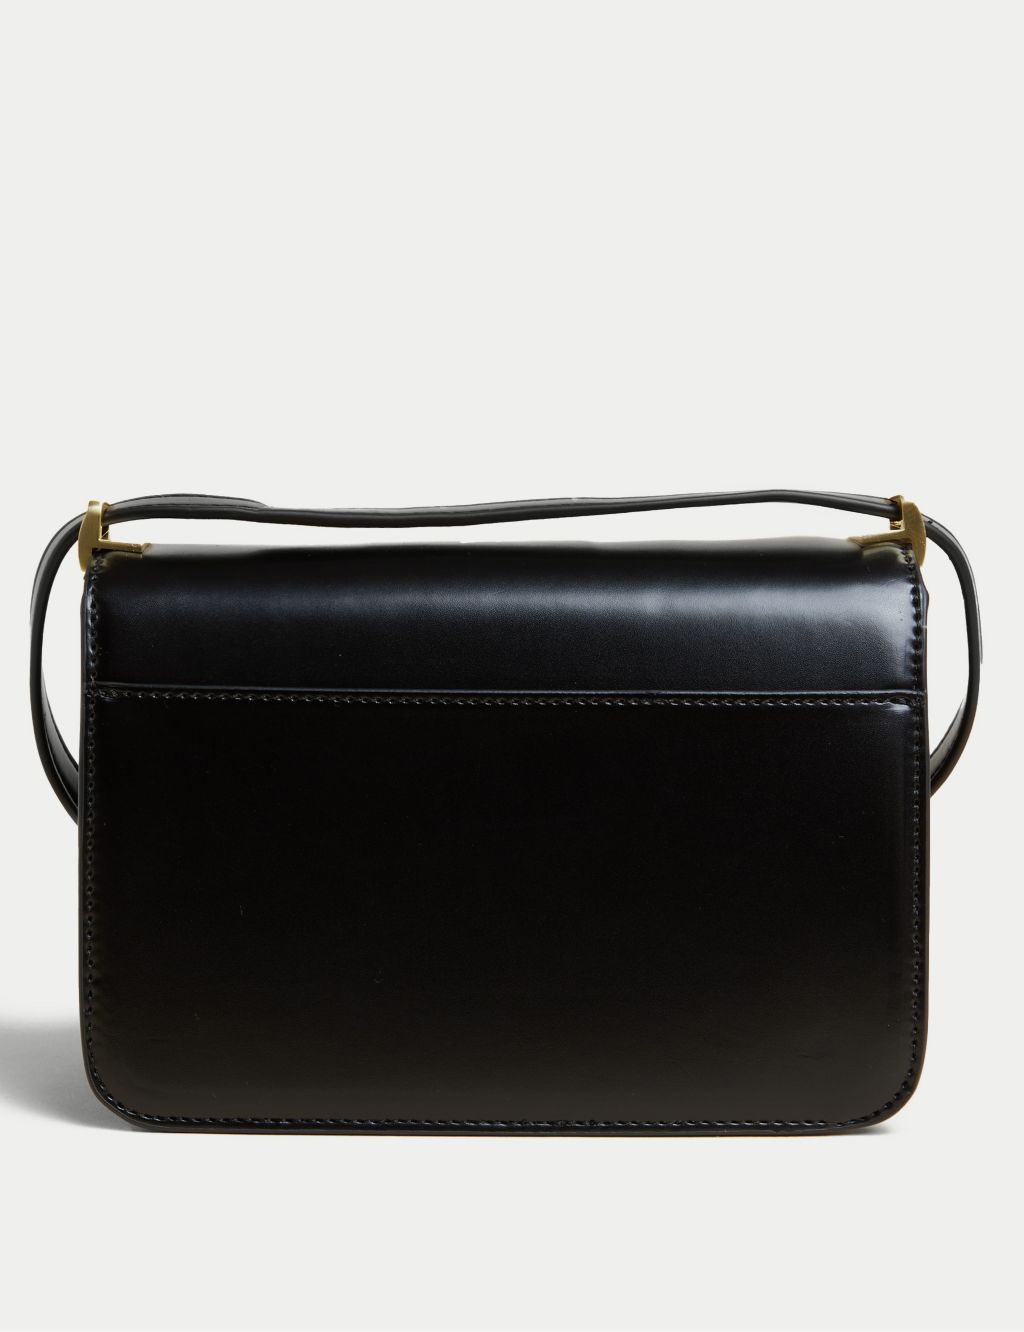 Small Multi Pocket Casual Crossbody Bag for Women Black Leather Quilted  Cross Body Phone Purses Ladies Designer Handbag